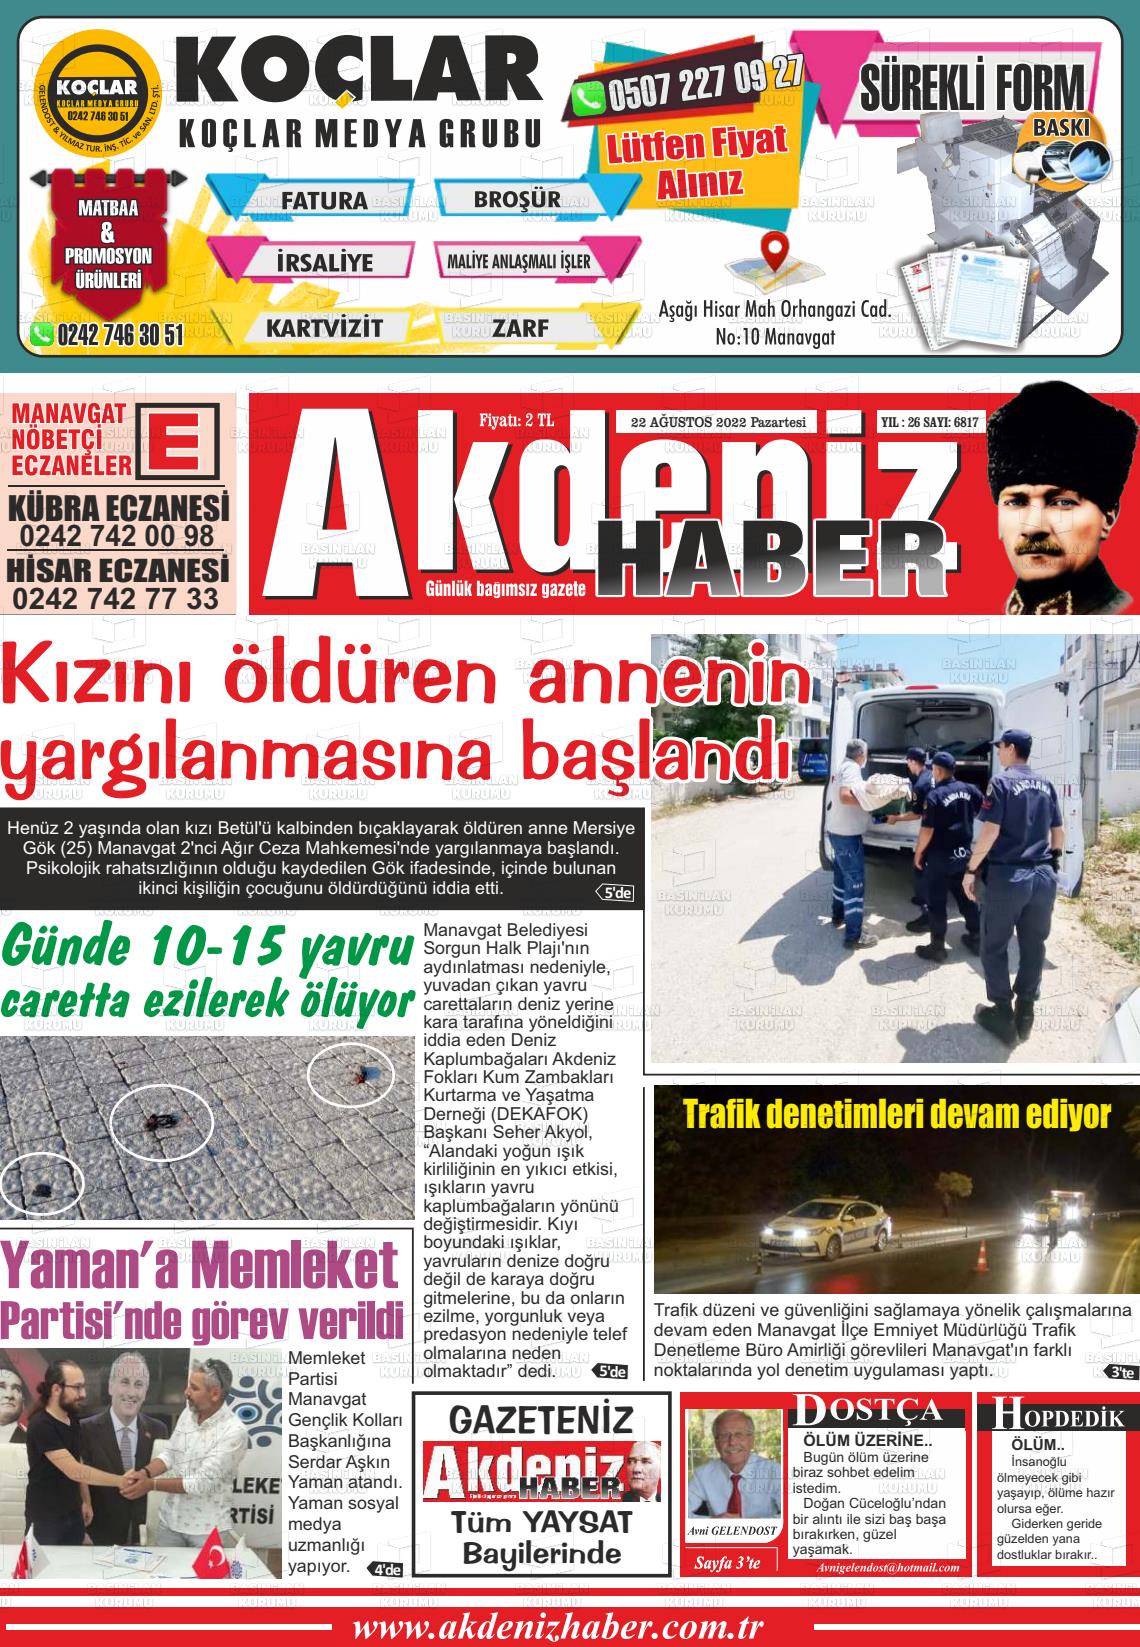 22 Ağustos 2022 Akdeniz Haber Gazete Manşeti